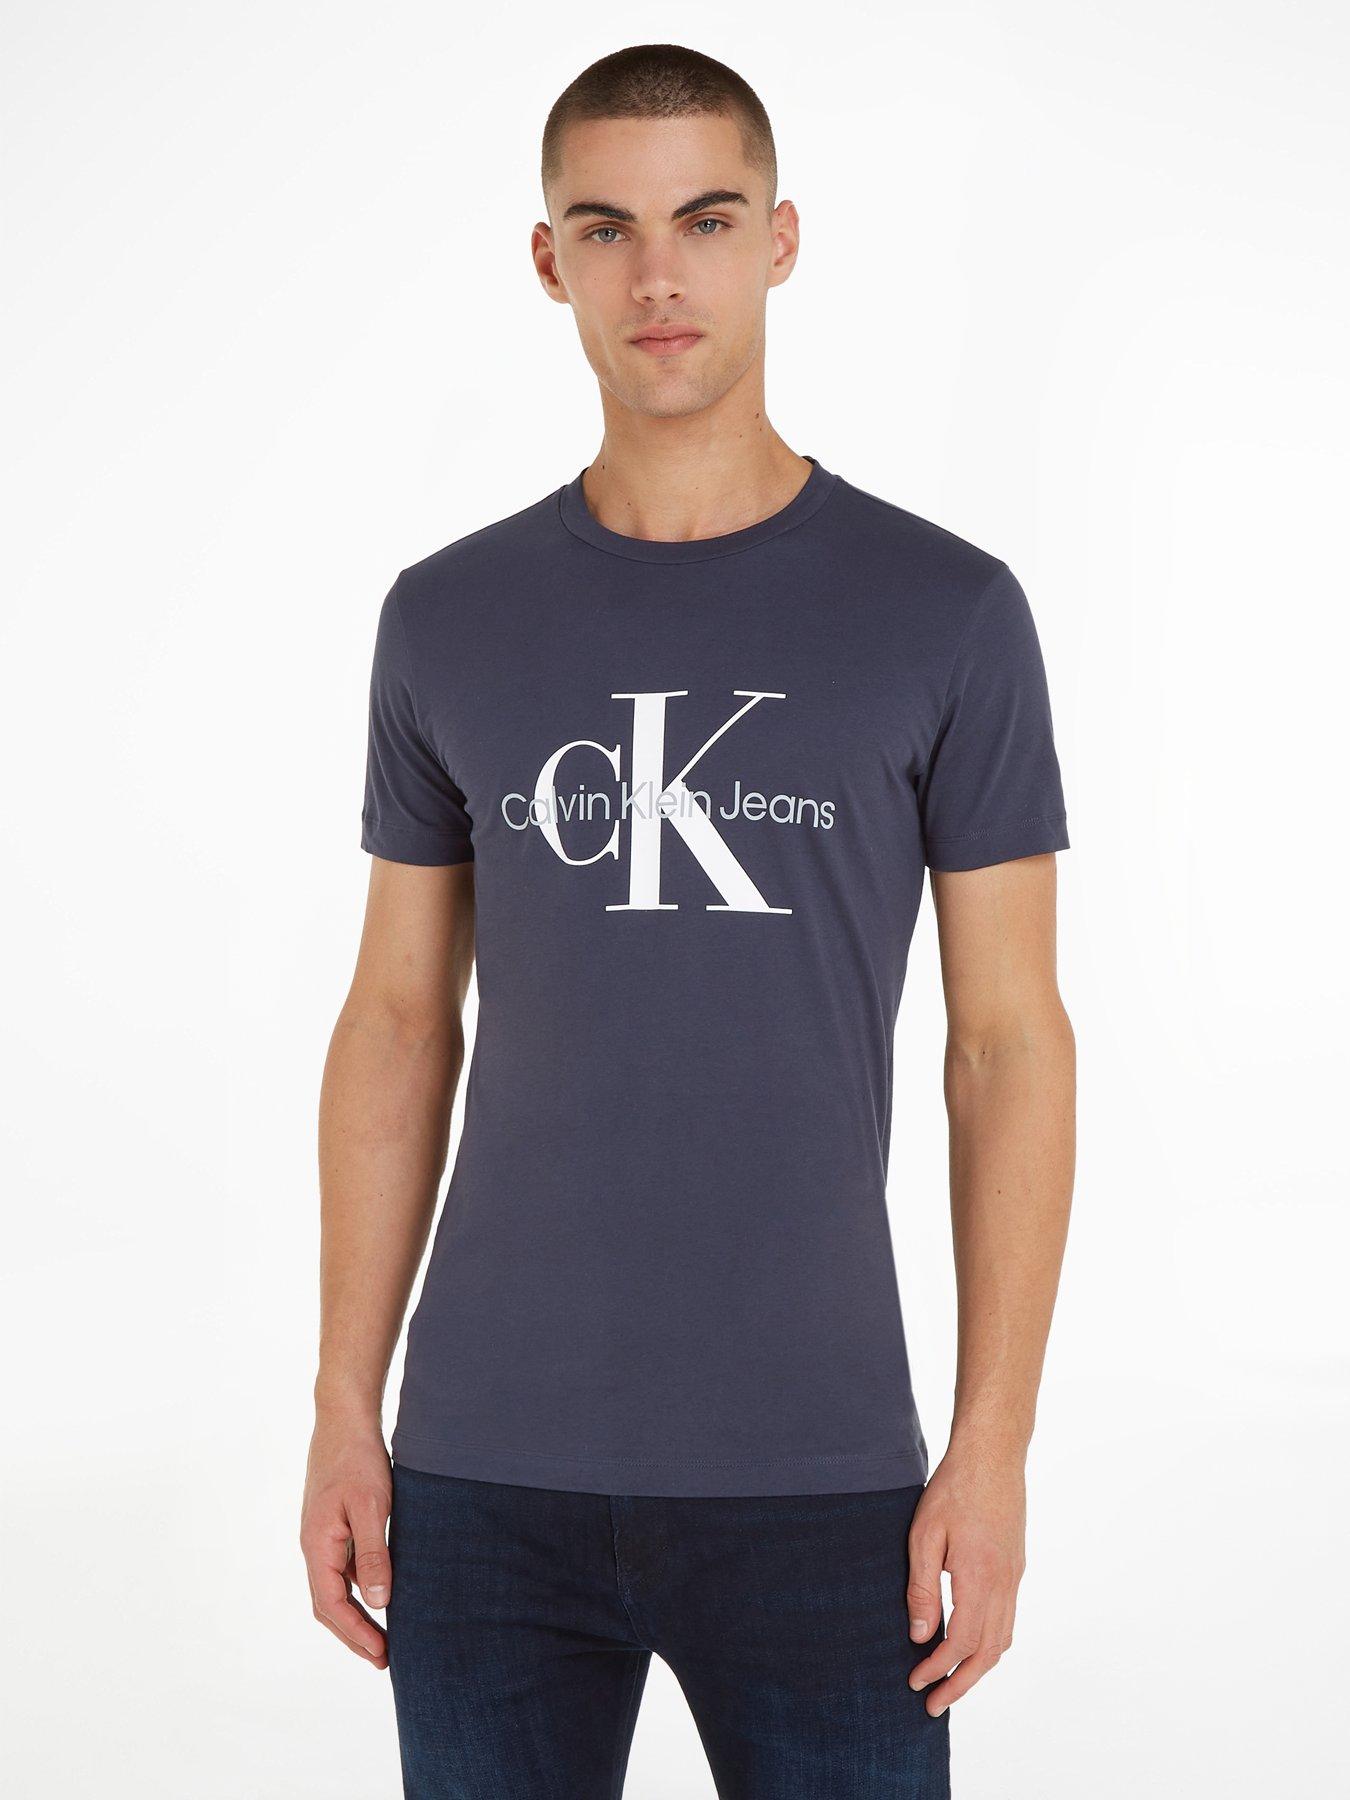 Calvin Klein Jeans Monologo Cropped T-Shirt